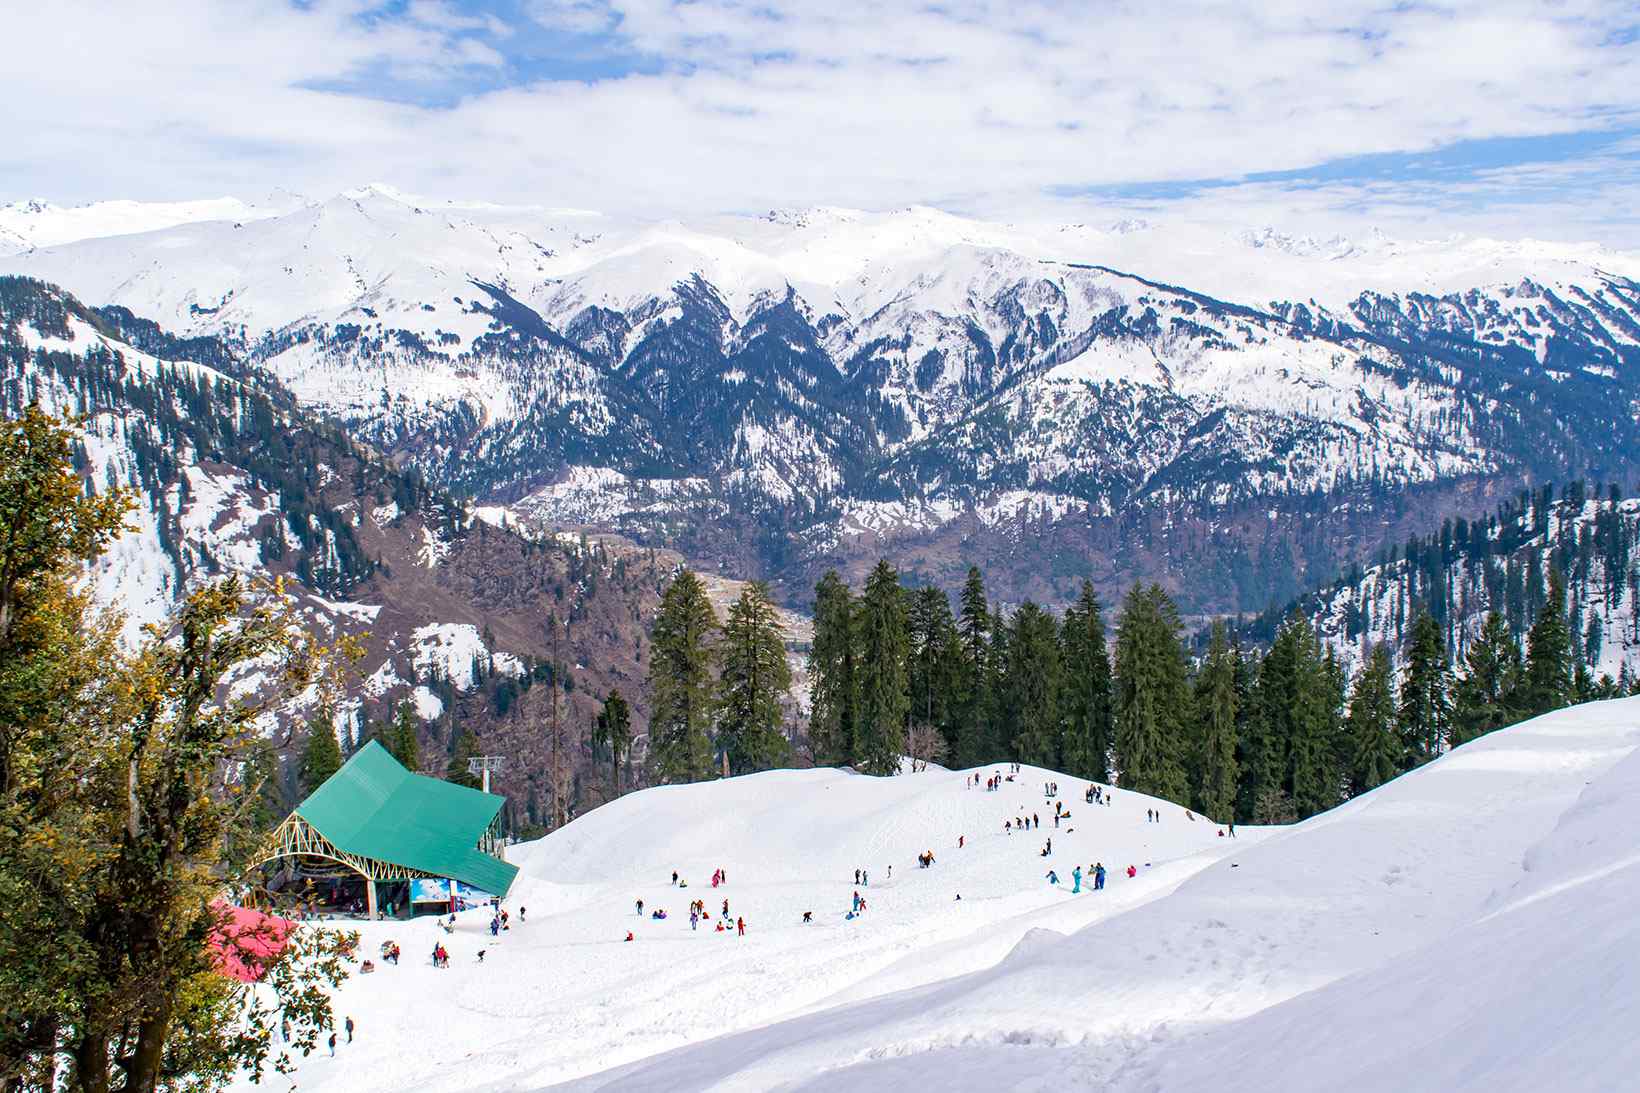 Top 10 Best Places to Visit in Himachal Pradesh, India